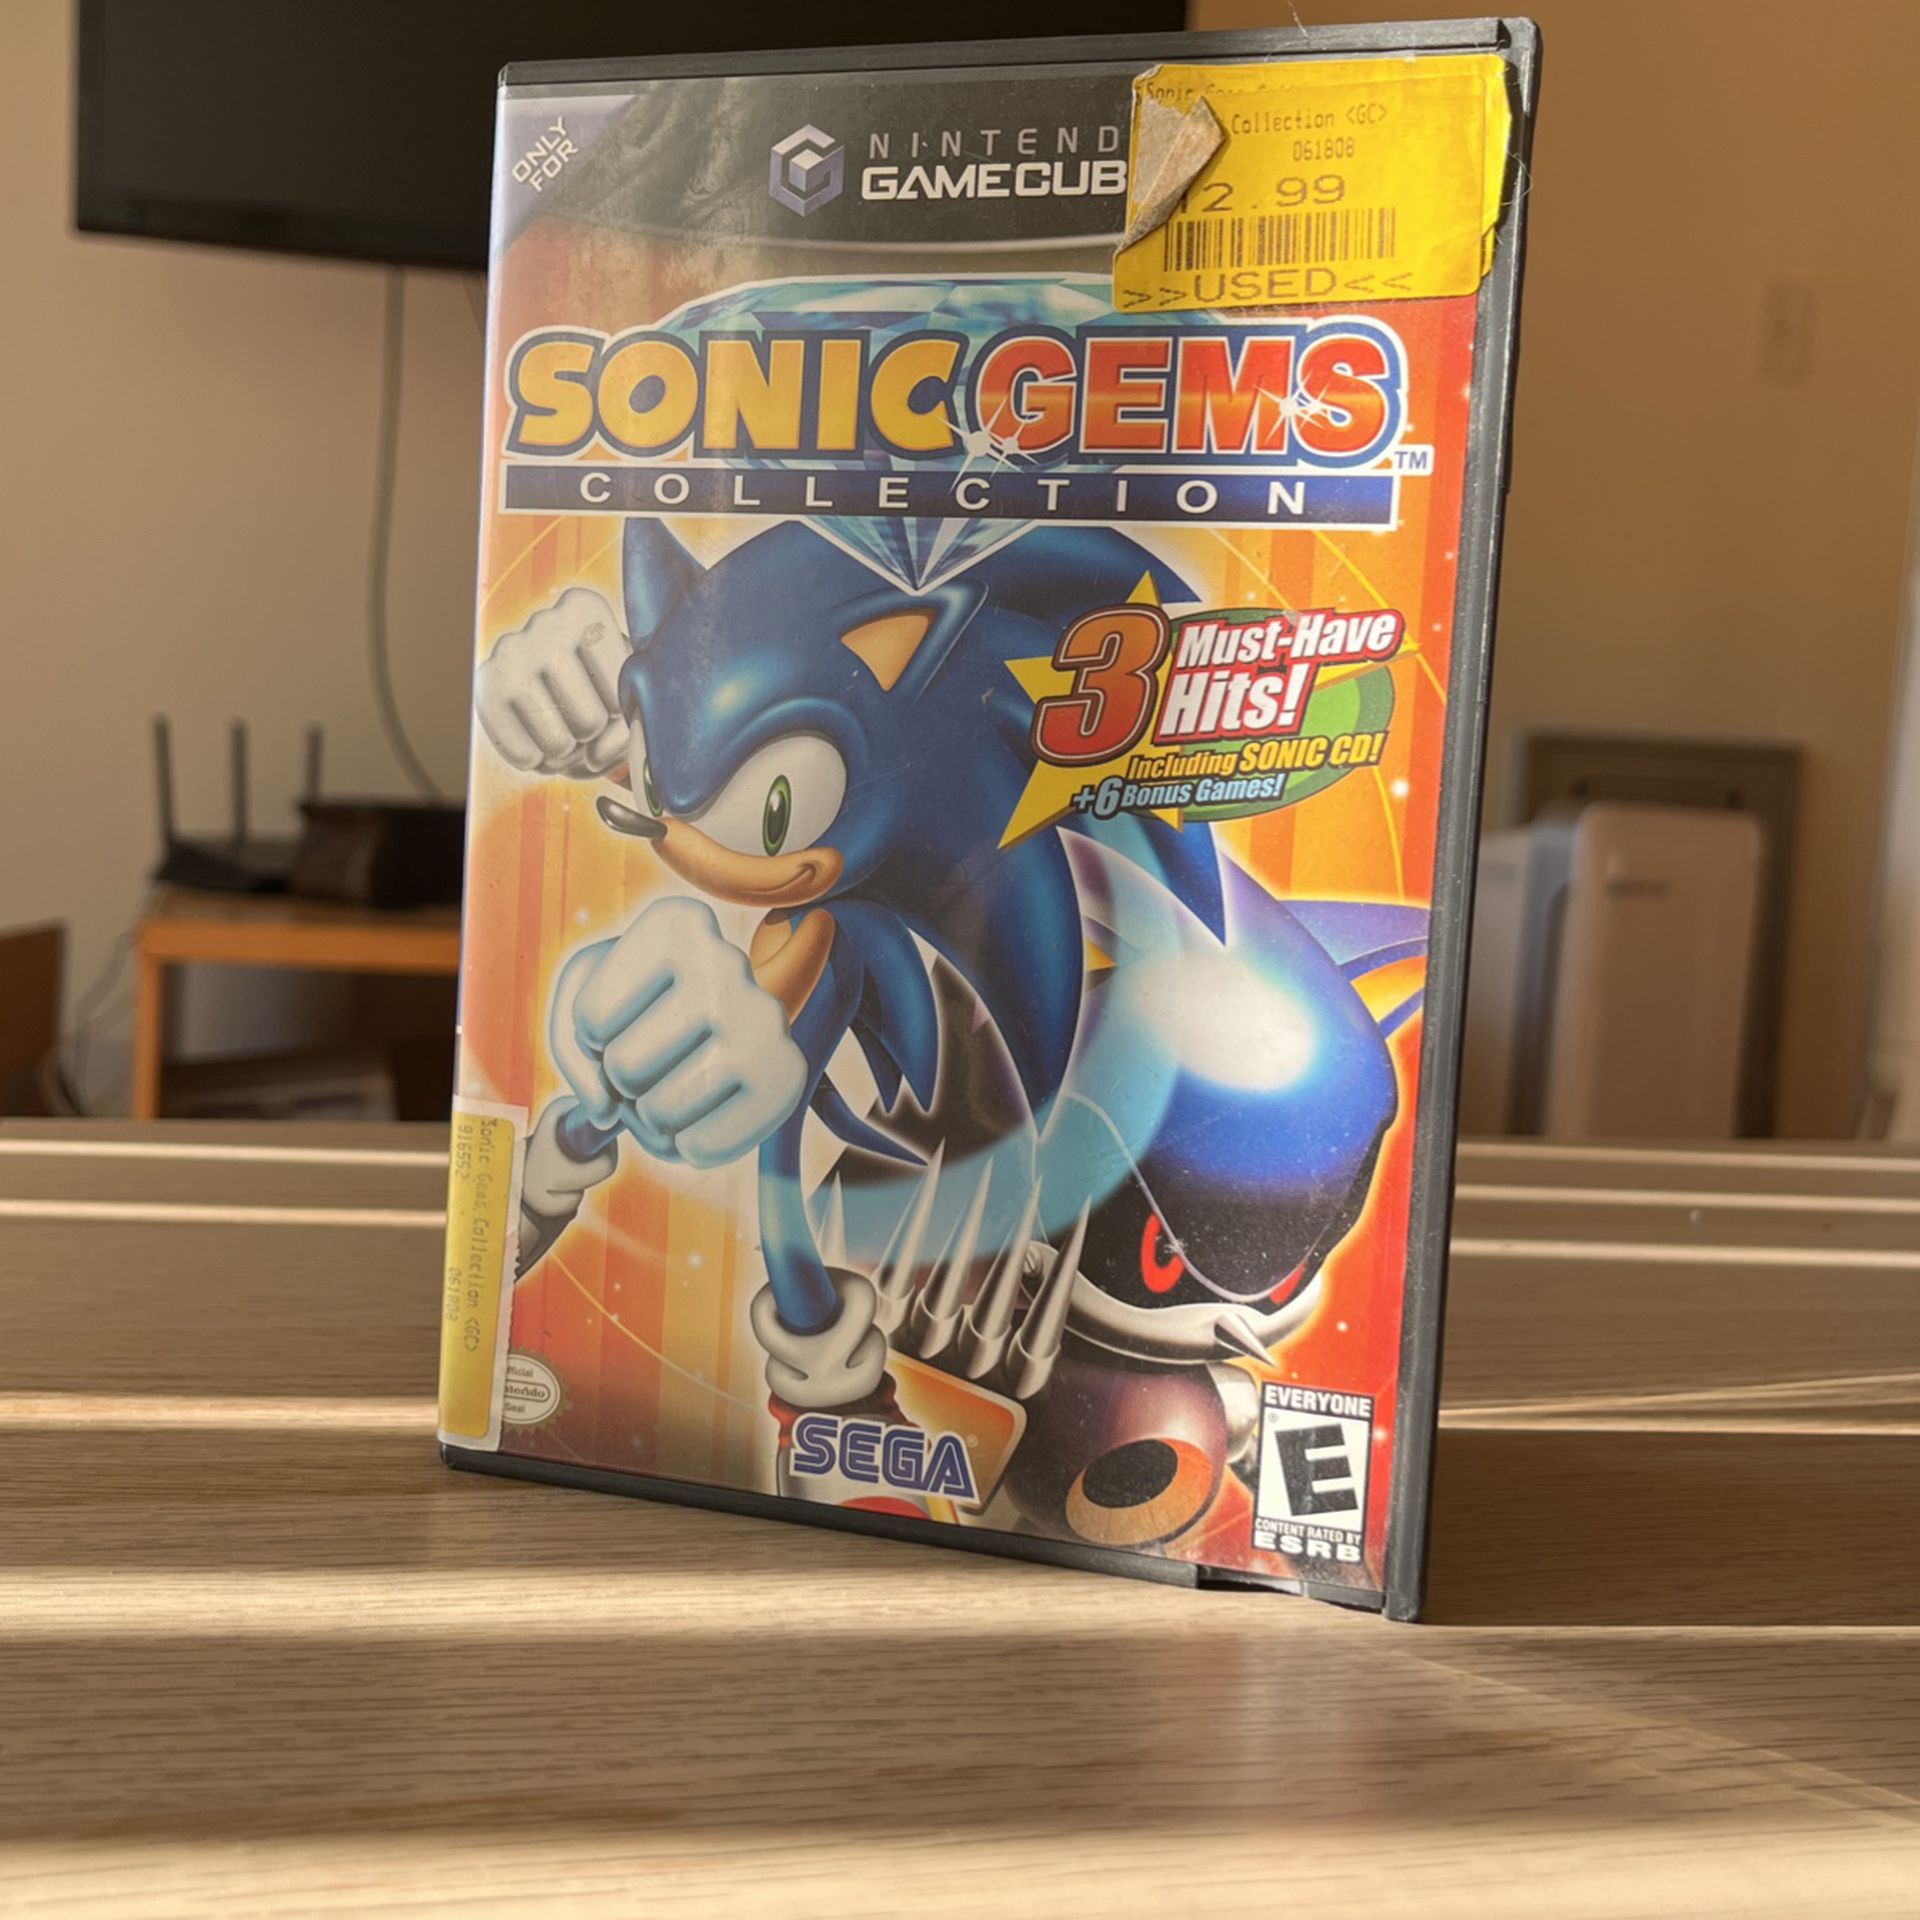 Sonic: Gems Collection - Nintendo GameCube 